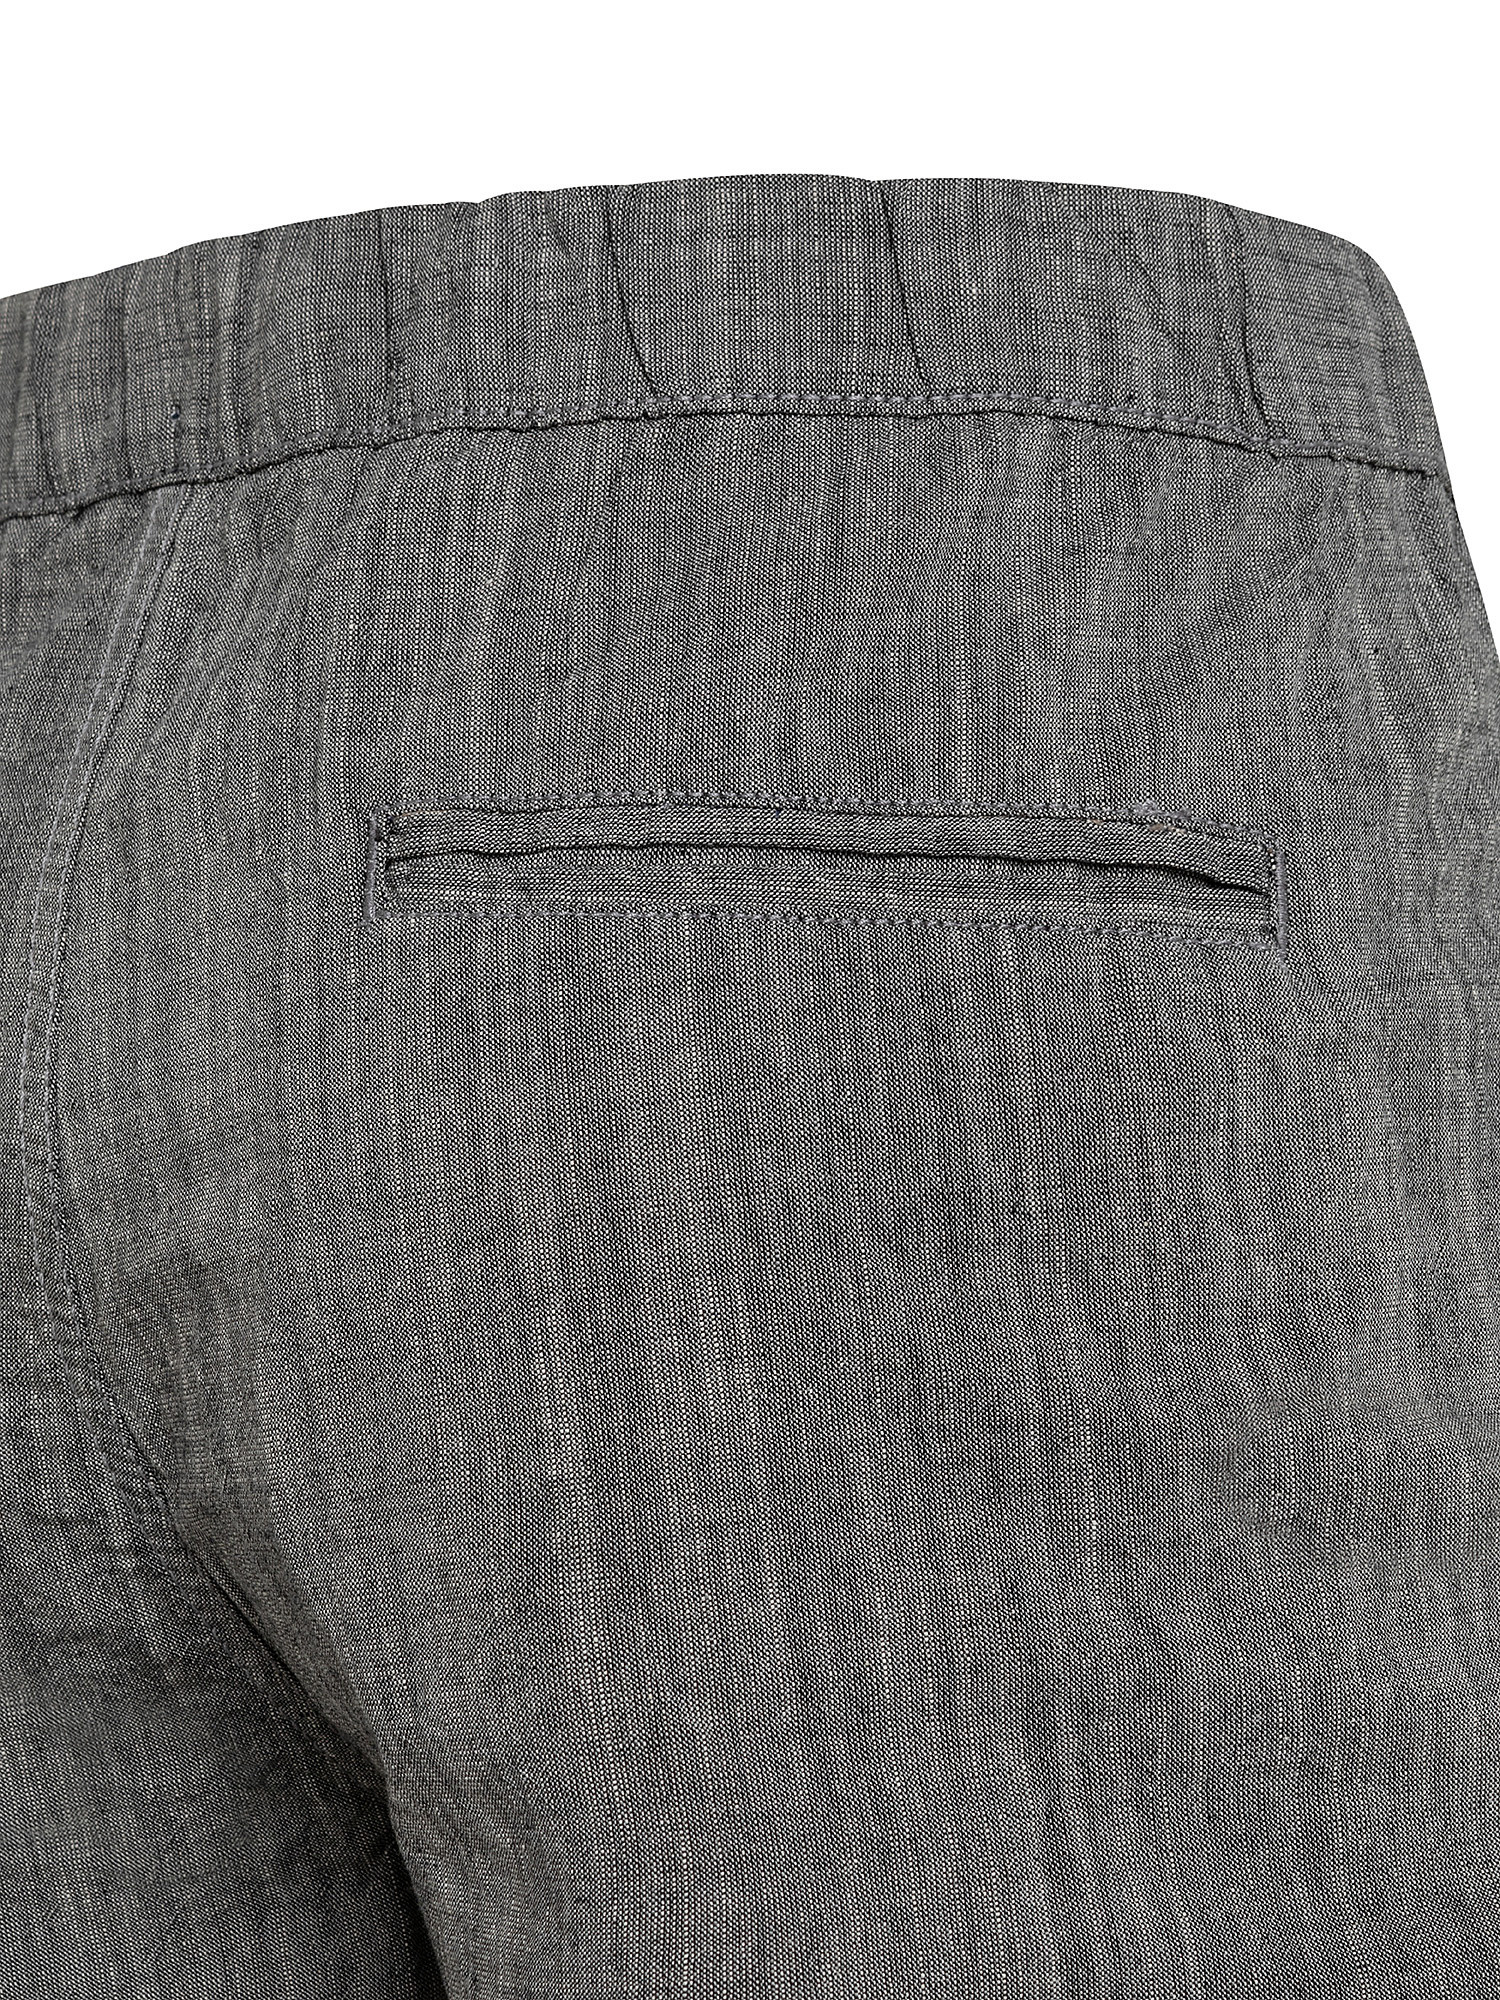 Bermuda shorts with drawstring at the waist, Grey, large image number 2